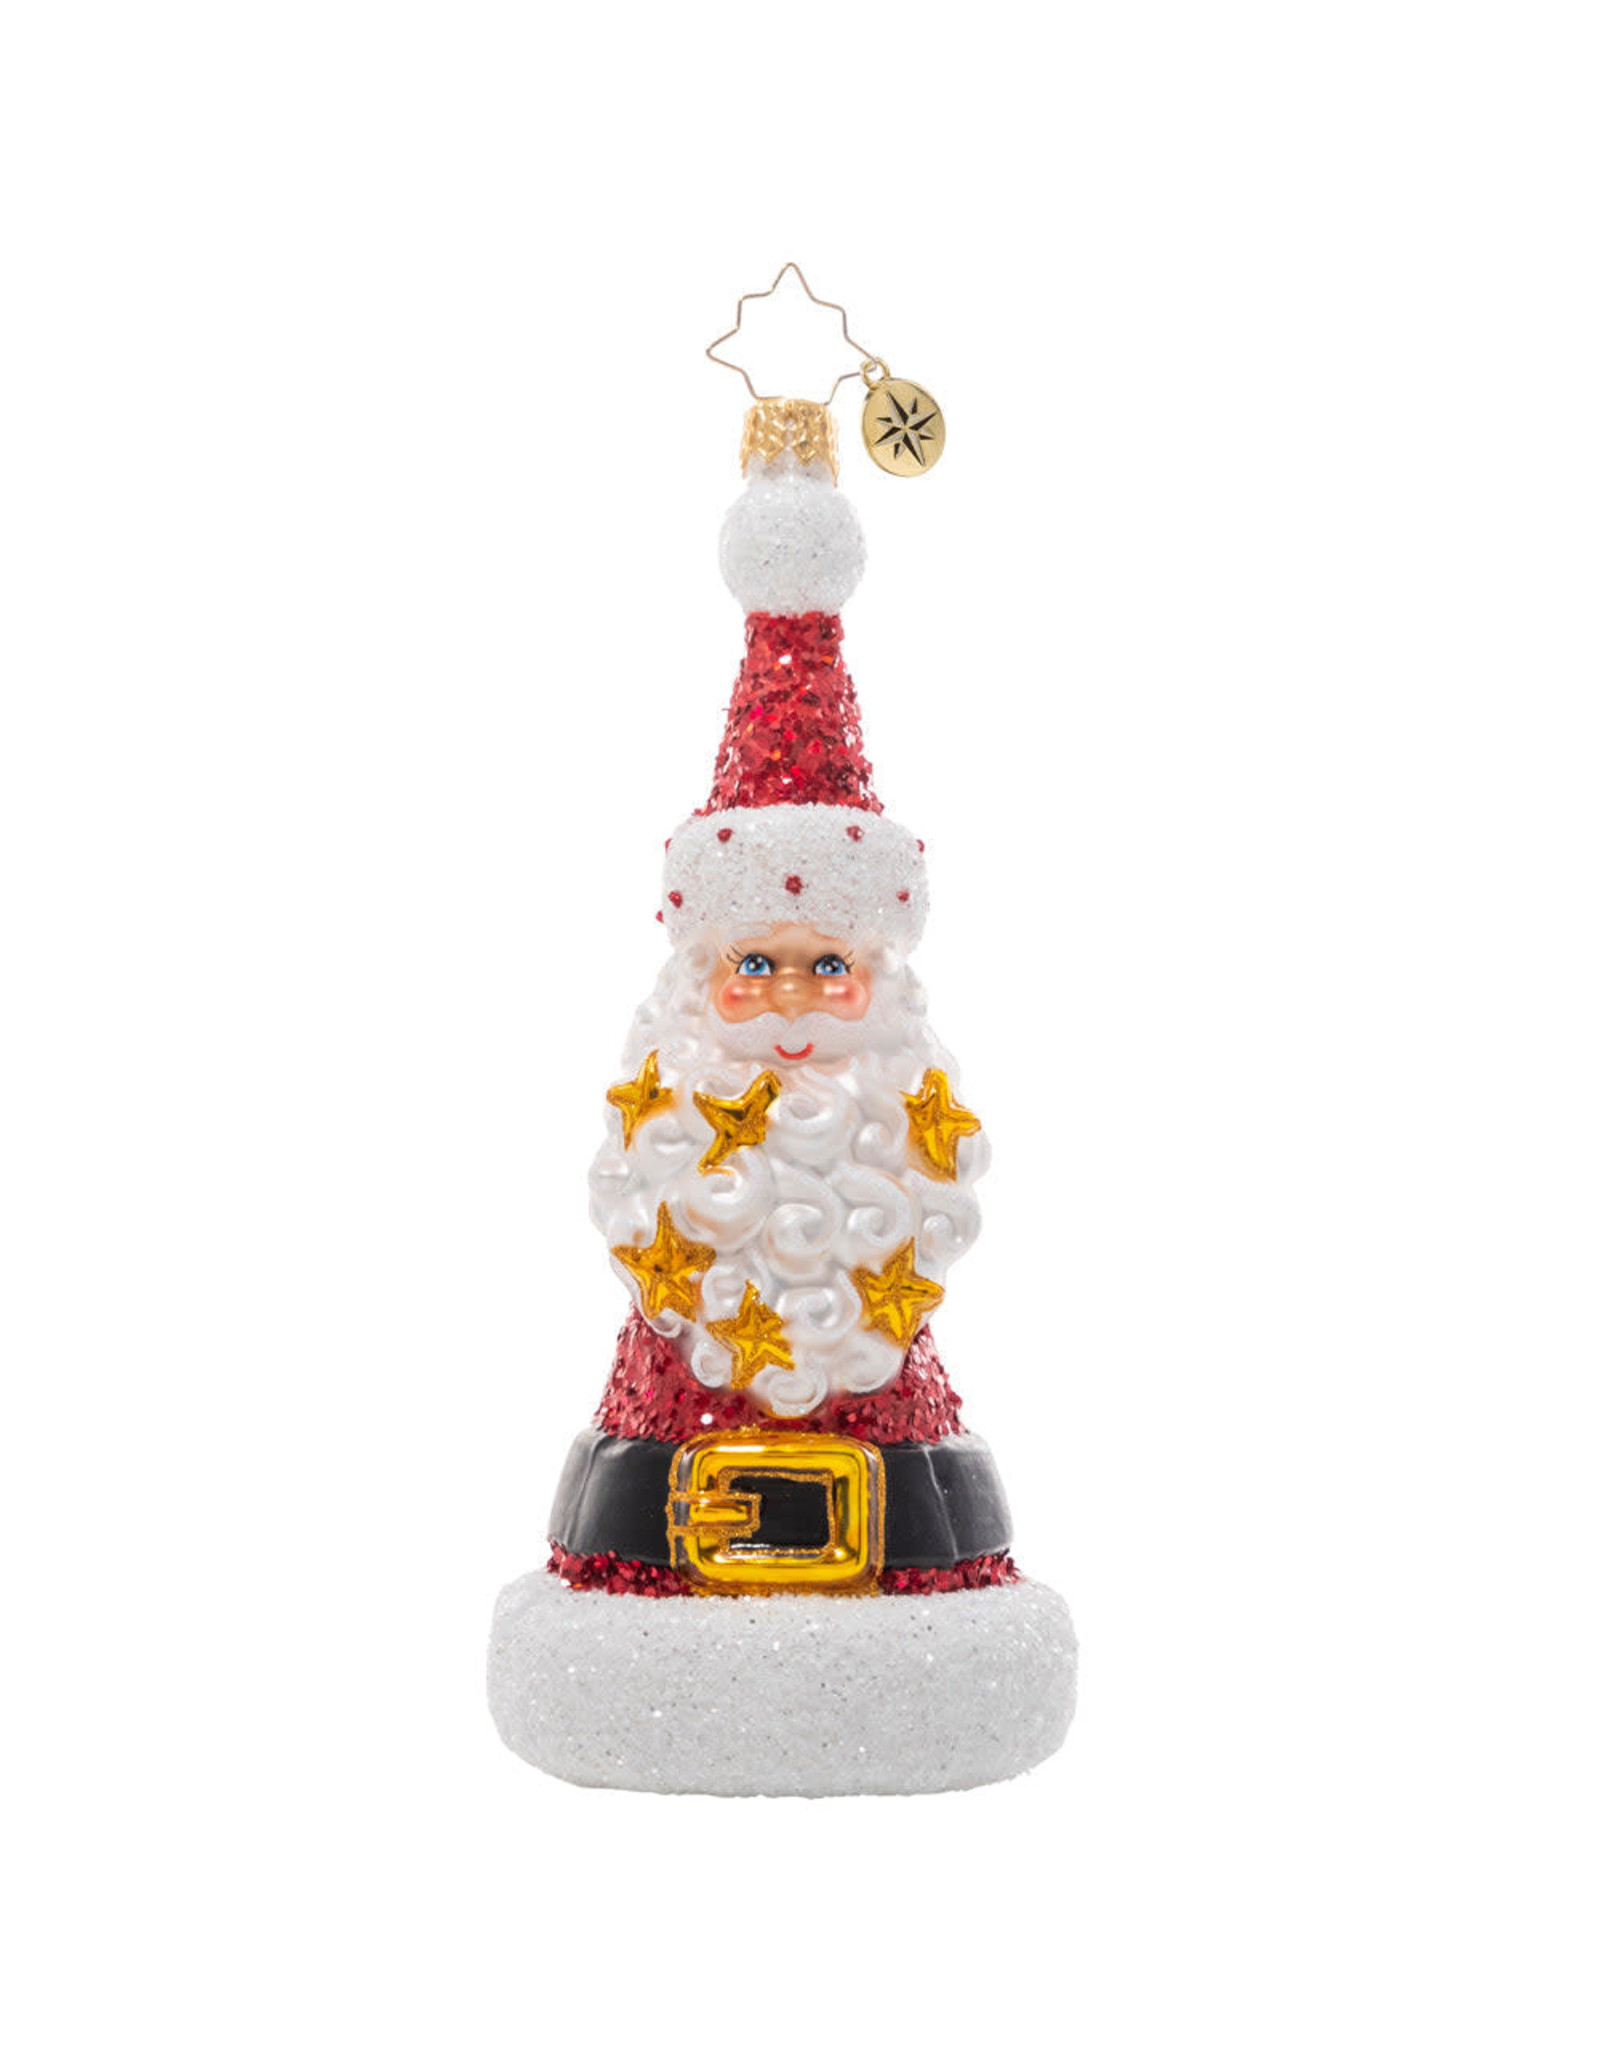 Christopher Radko Spangled Santa Christmas Ornament